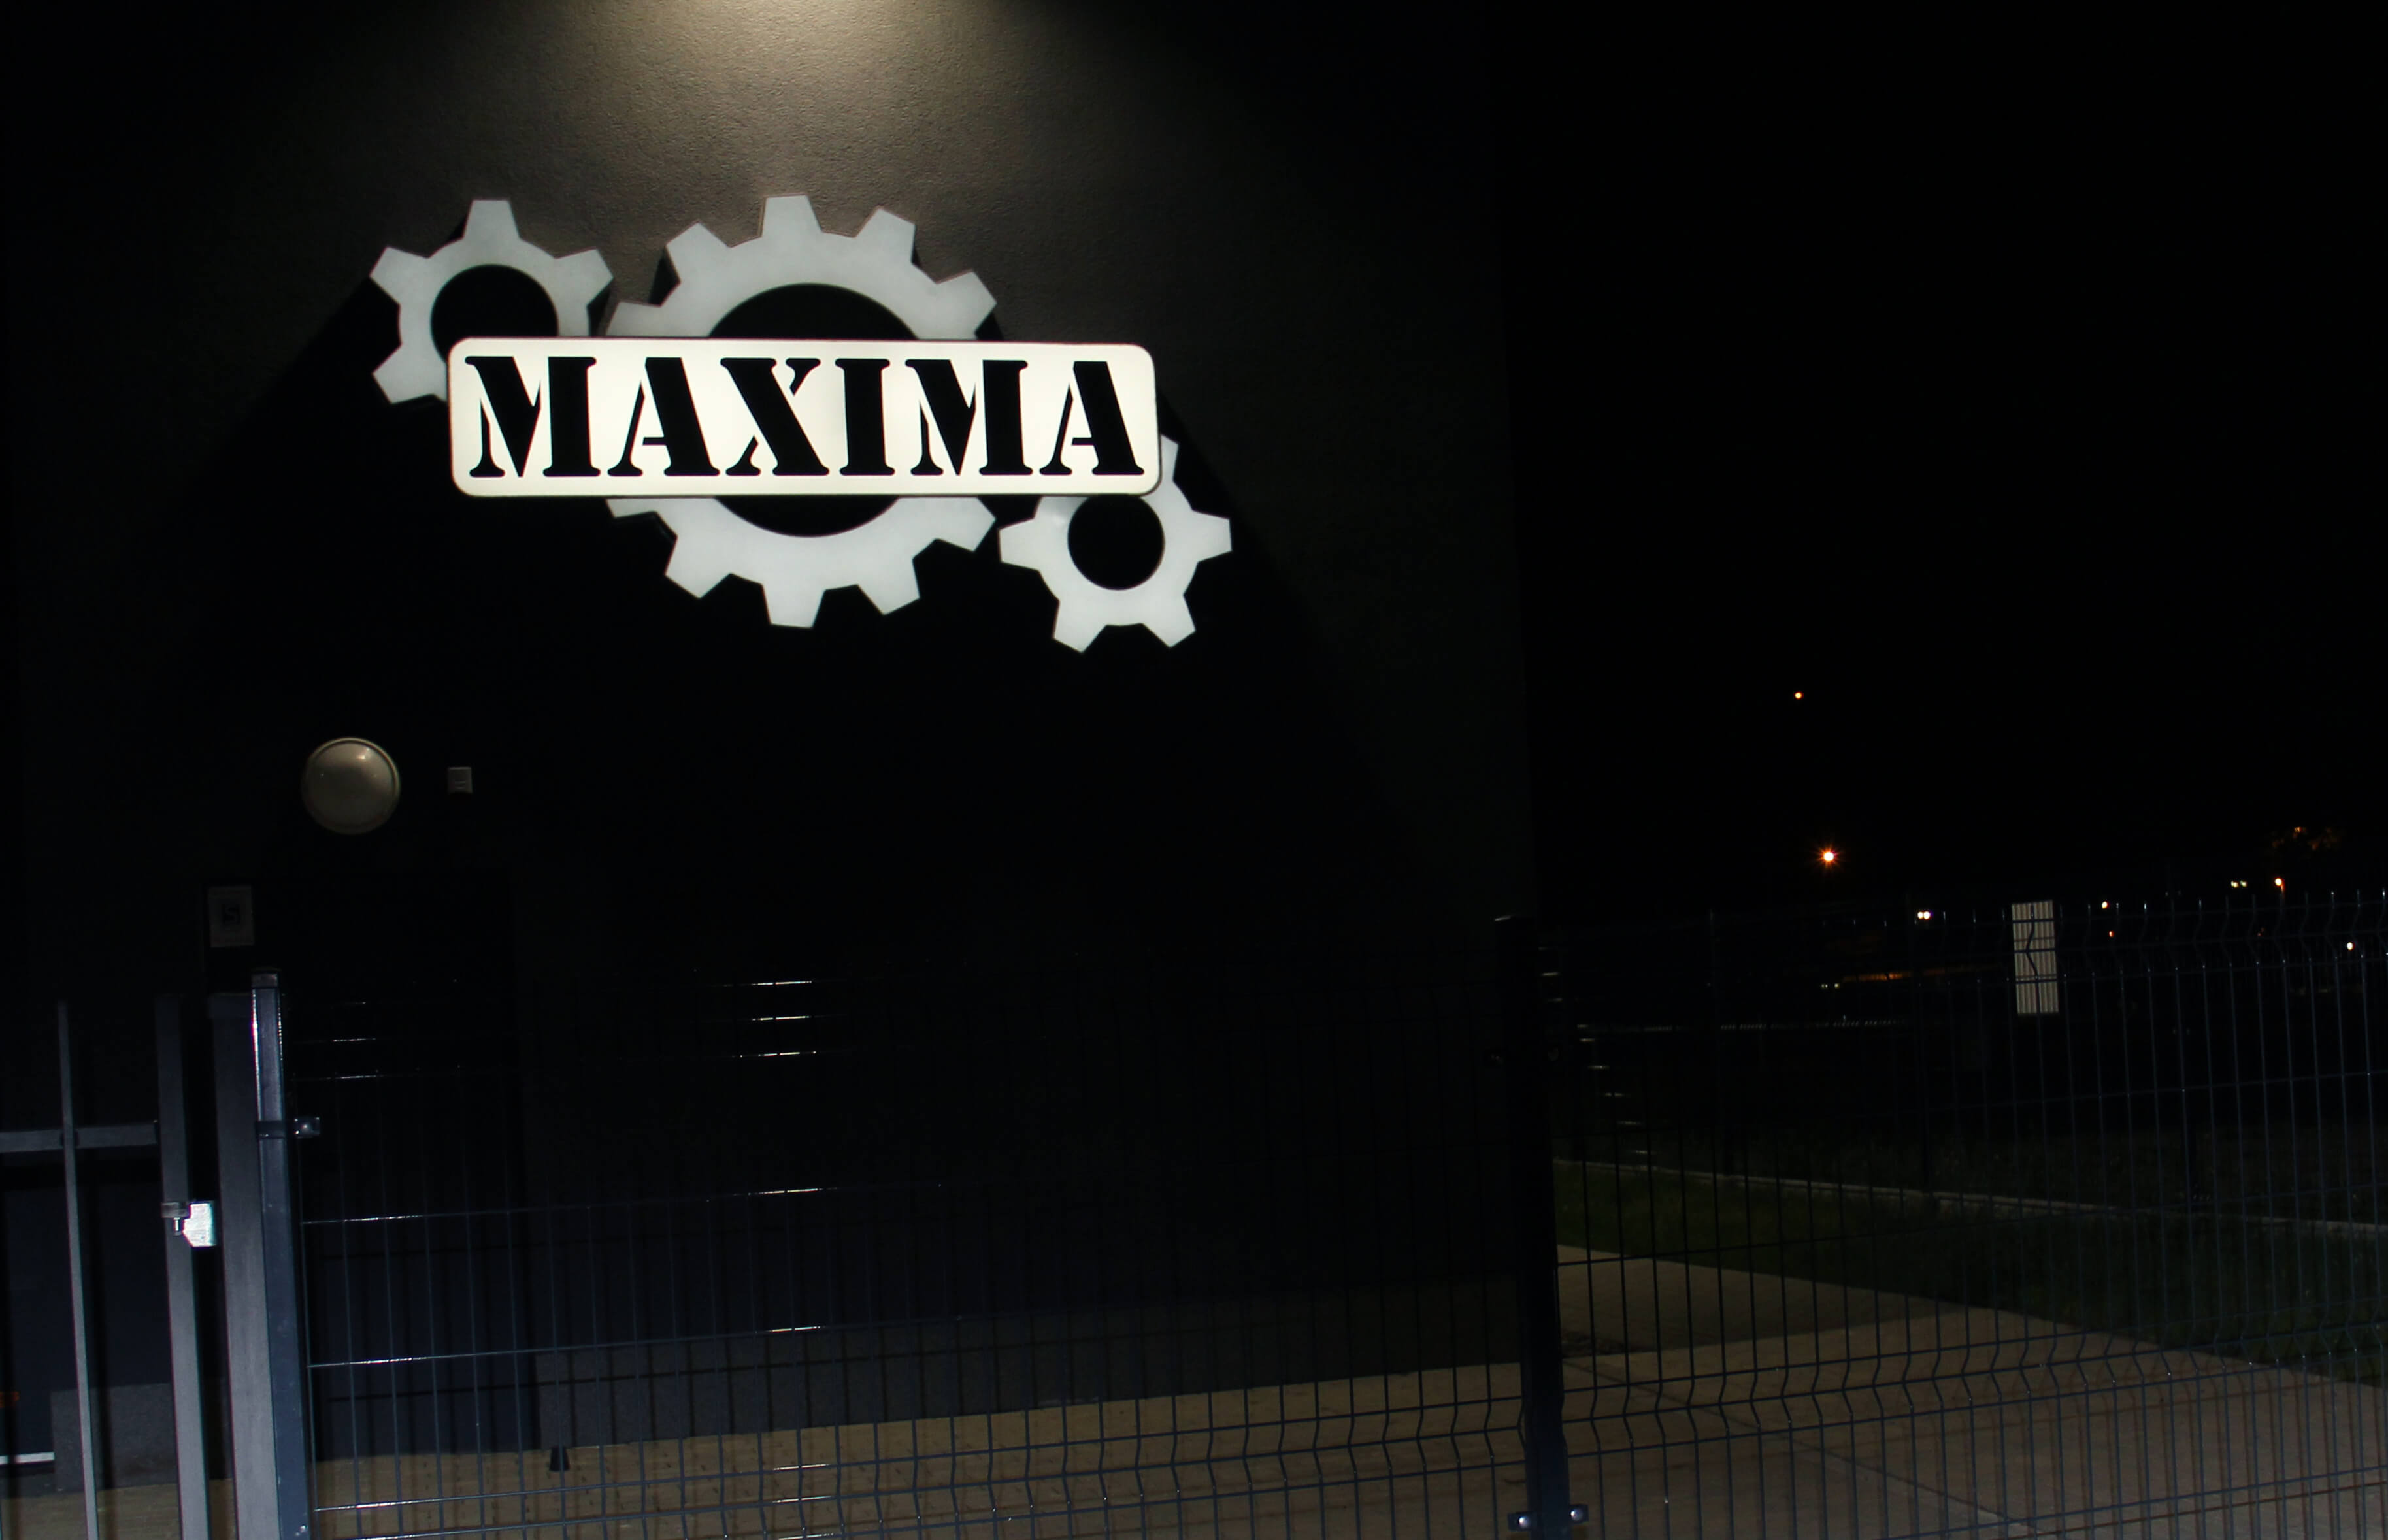 Maxima - Maxima - LED-Wandpaneel mit Firmenlogo, aus Plexiglas